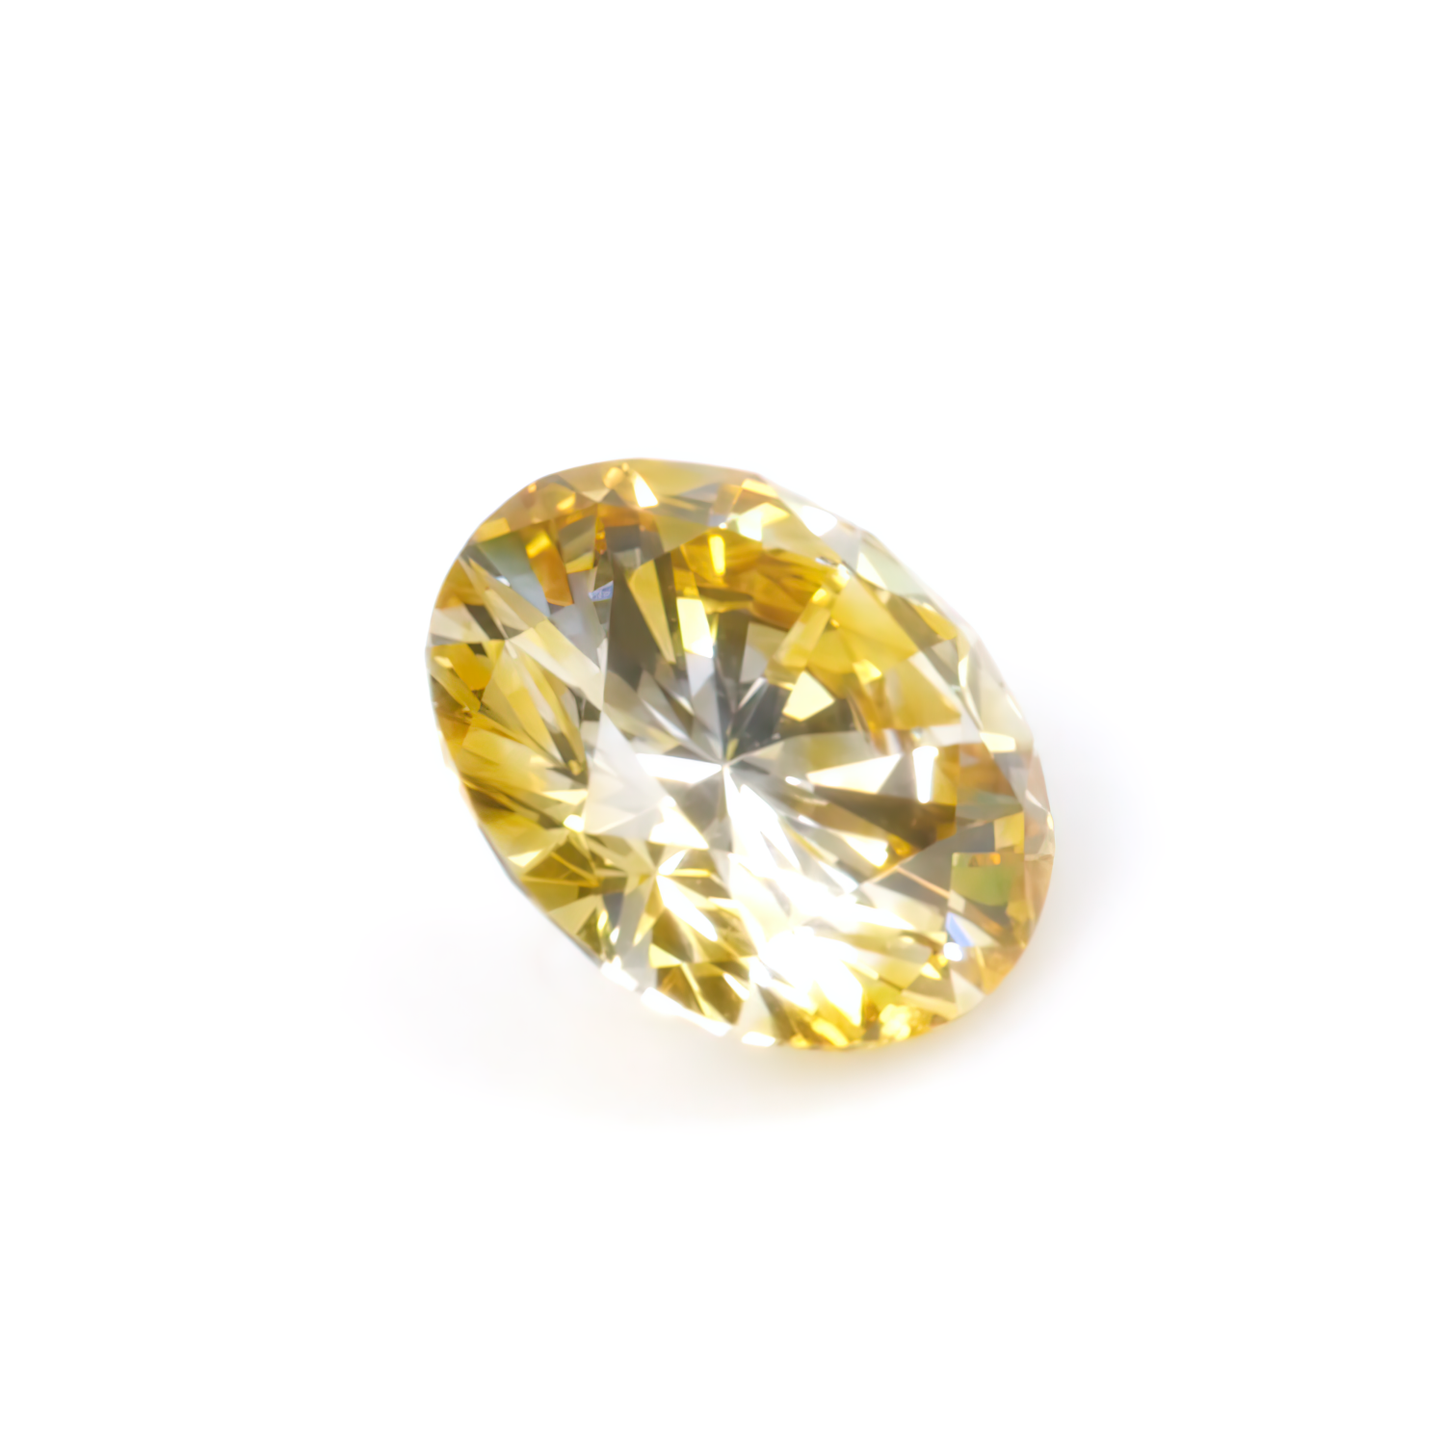 0.34ct Fancy Yellow, Round Diamond, VS2 - 4.66 - 4.73 x 2.68mm